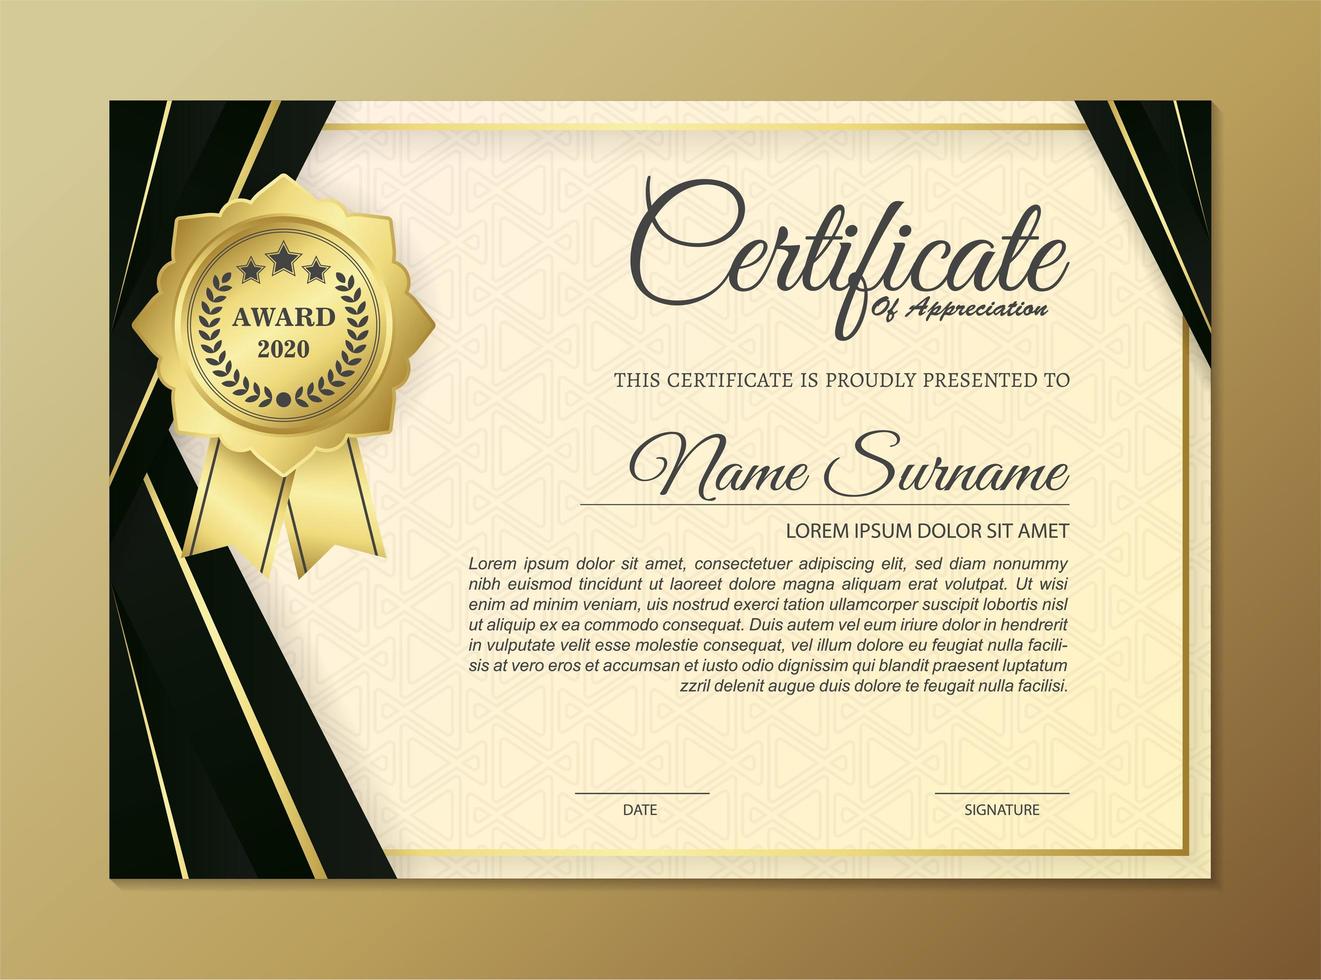 Premium golden black certificate template design vector